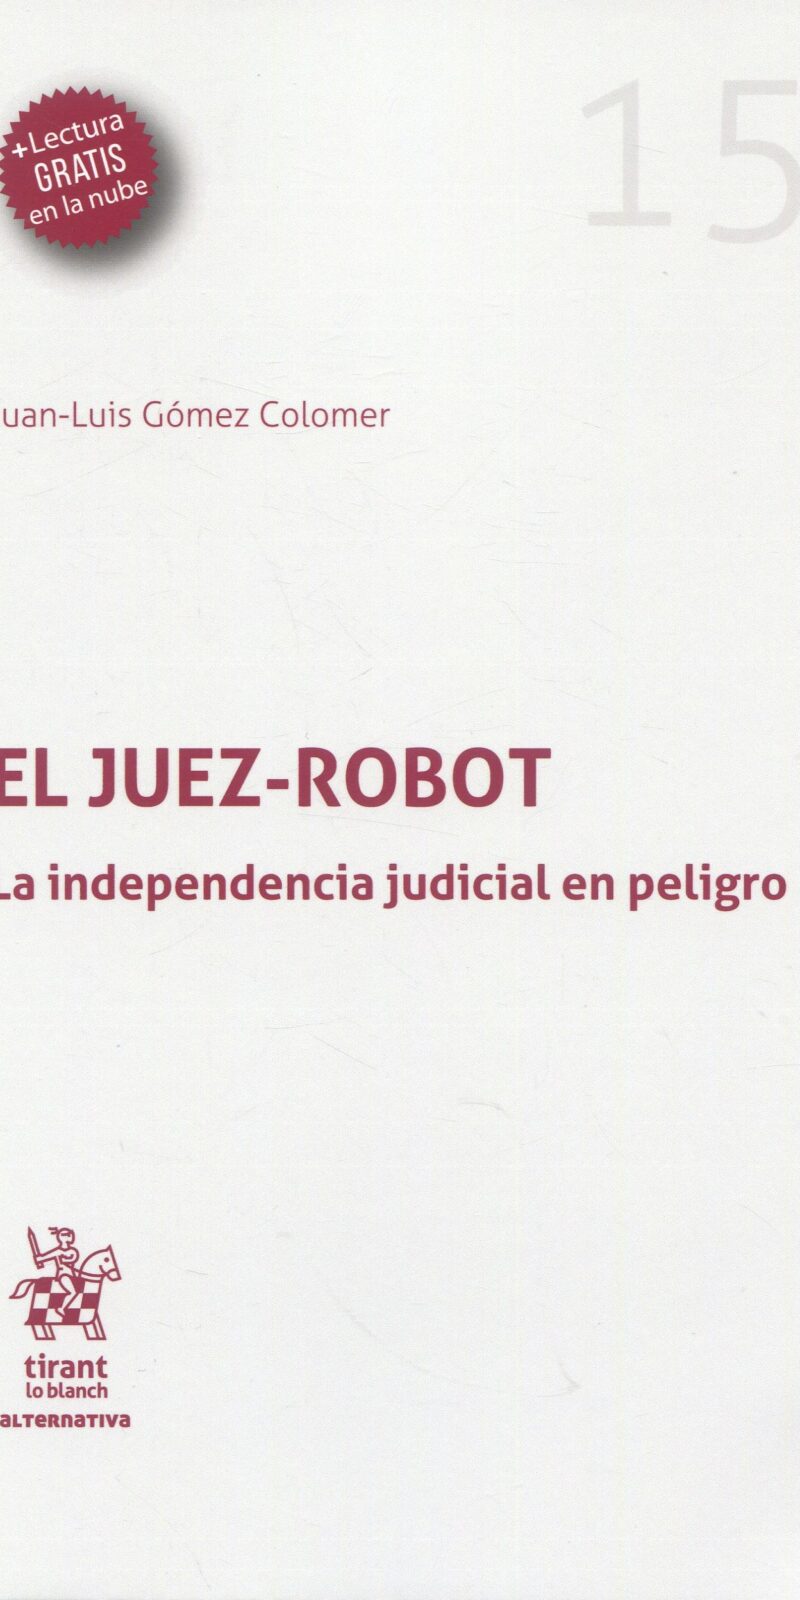 Juez Robot independencia judicial en peligro 9788411691284